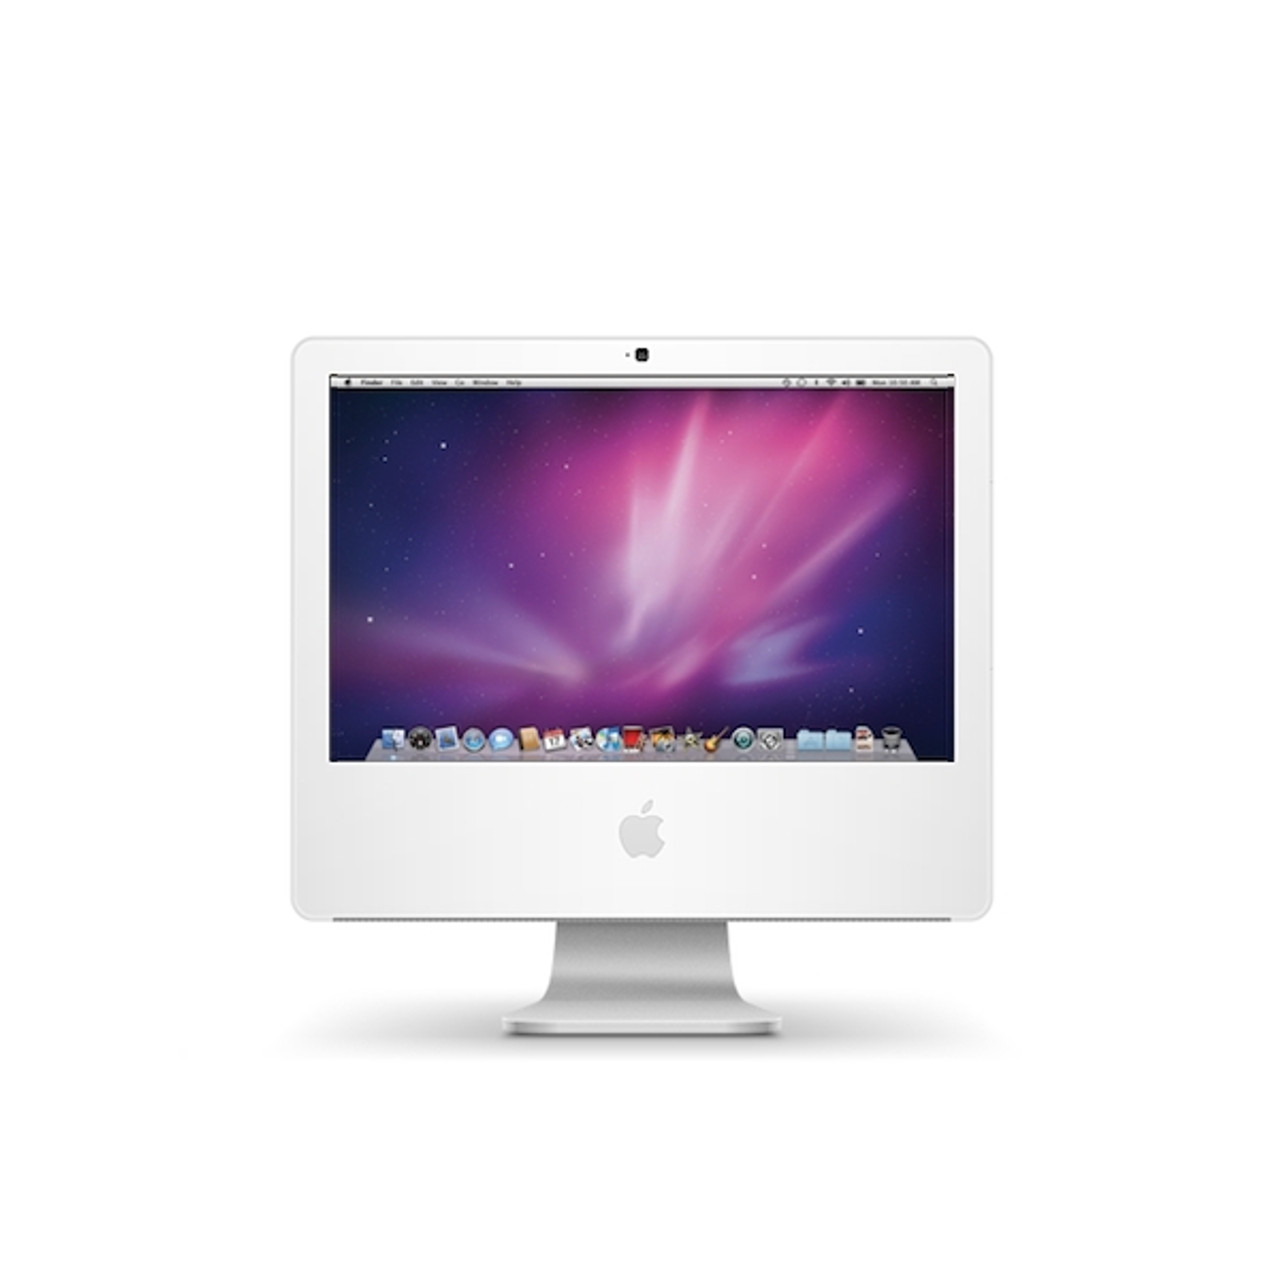 Apple iMac 20-inch, Late 2006 - 2.33GHz Core 2 Duo AIO